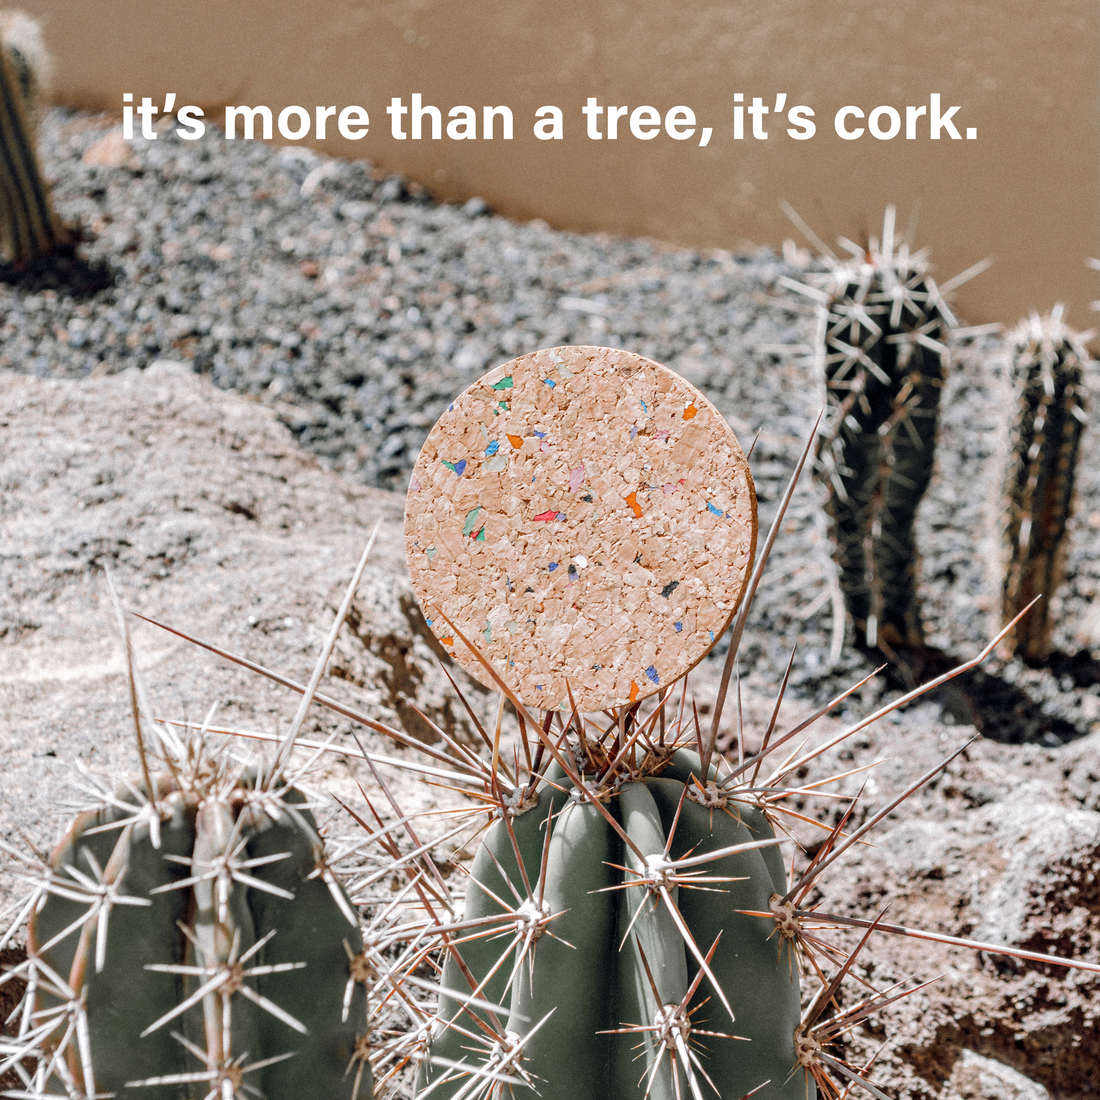 It's more than a tree, it's cork.